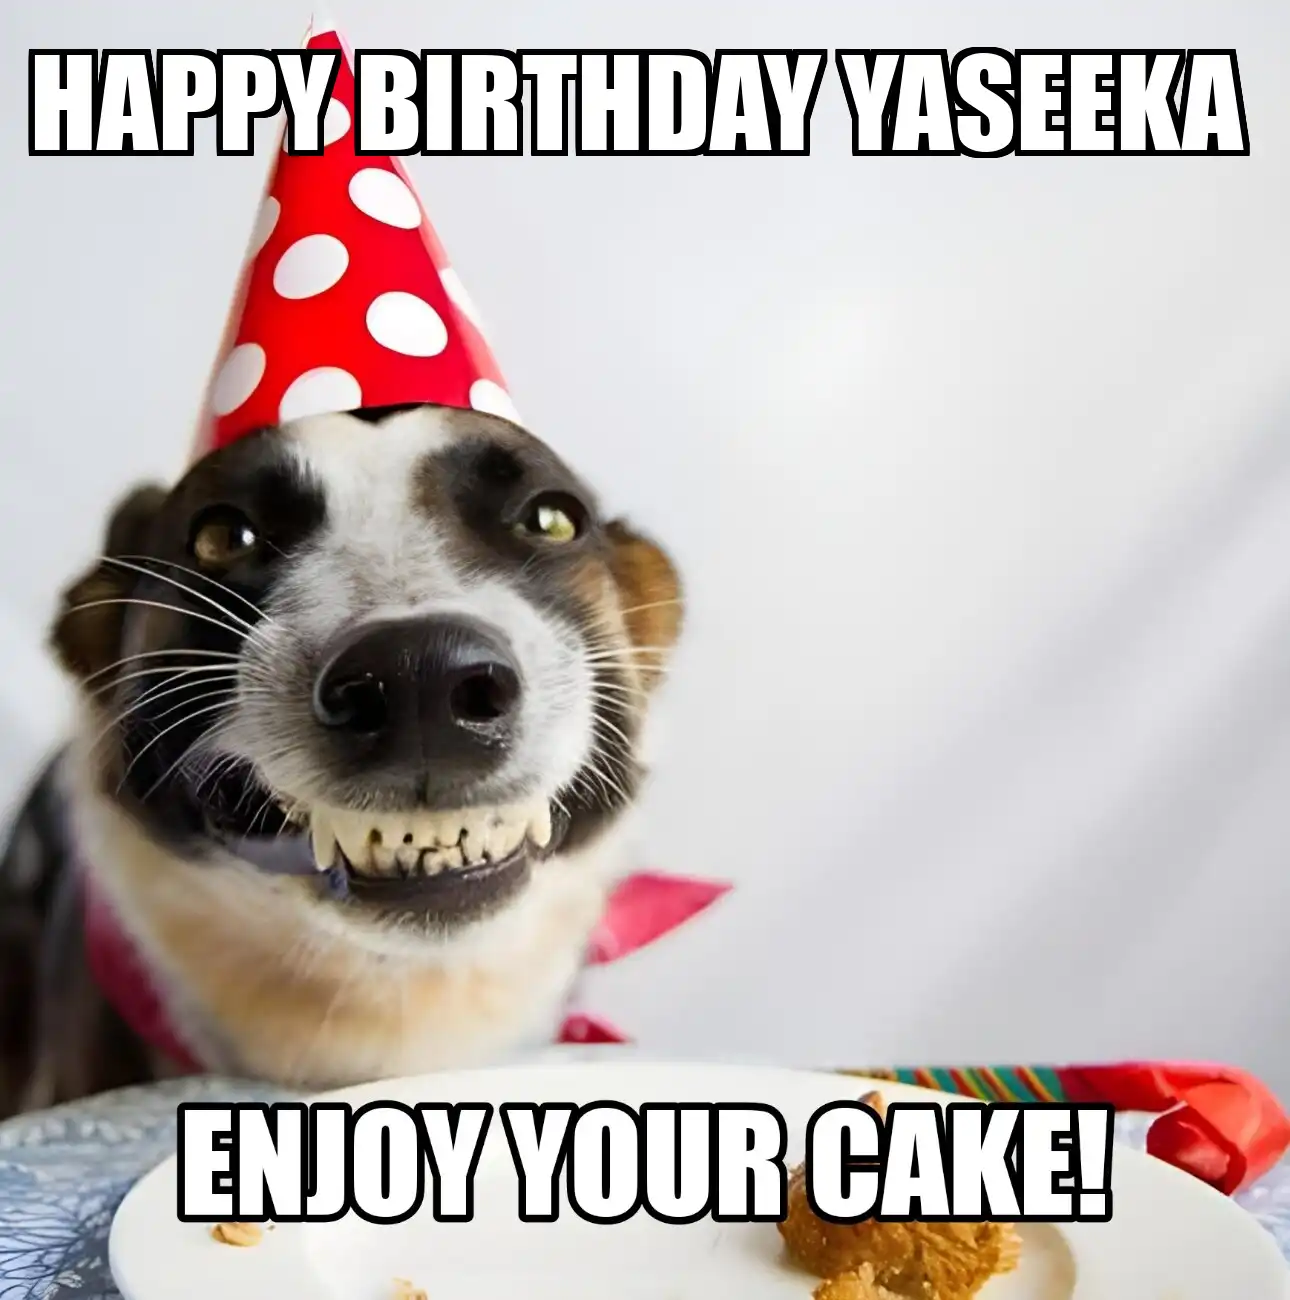 Happy Birthday Yaseeka Enjoy Your Cake Dog Meme